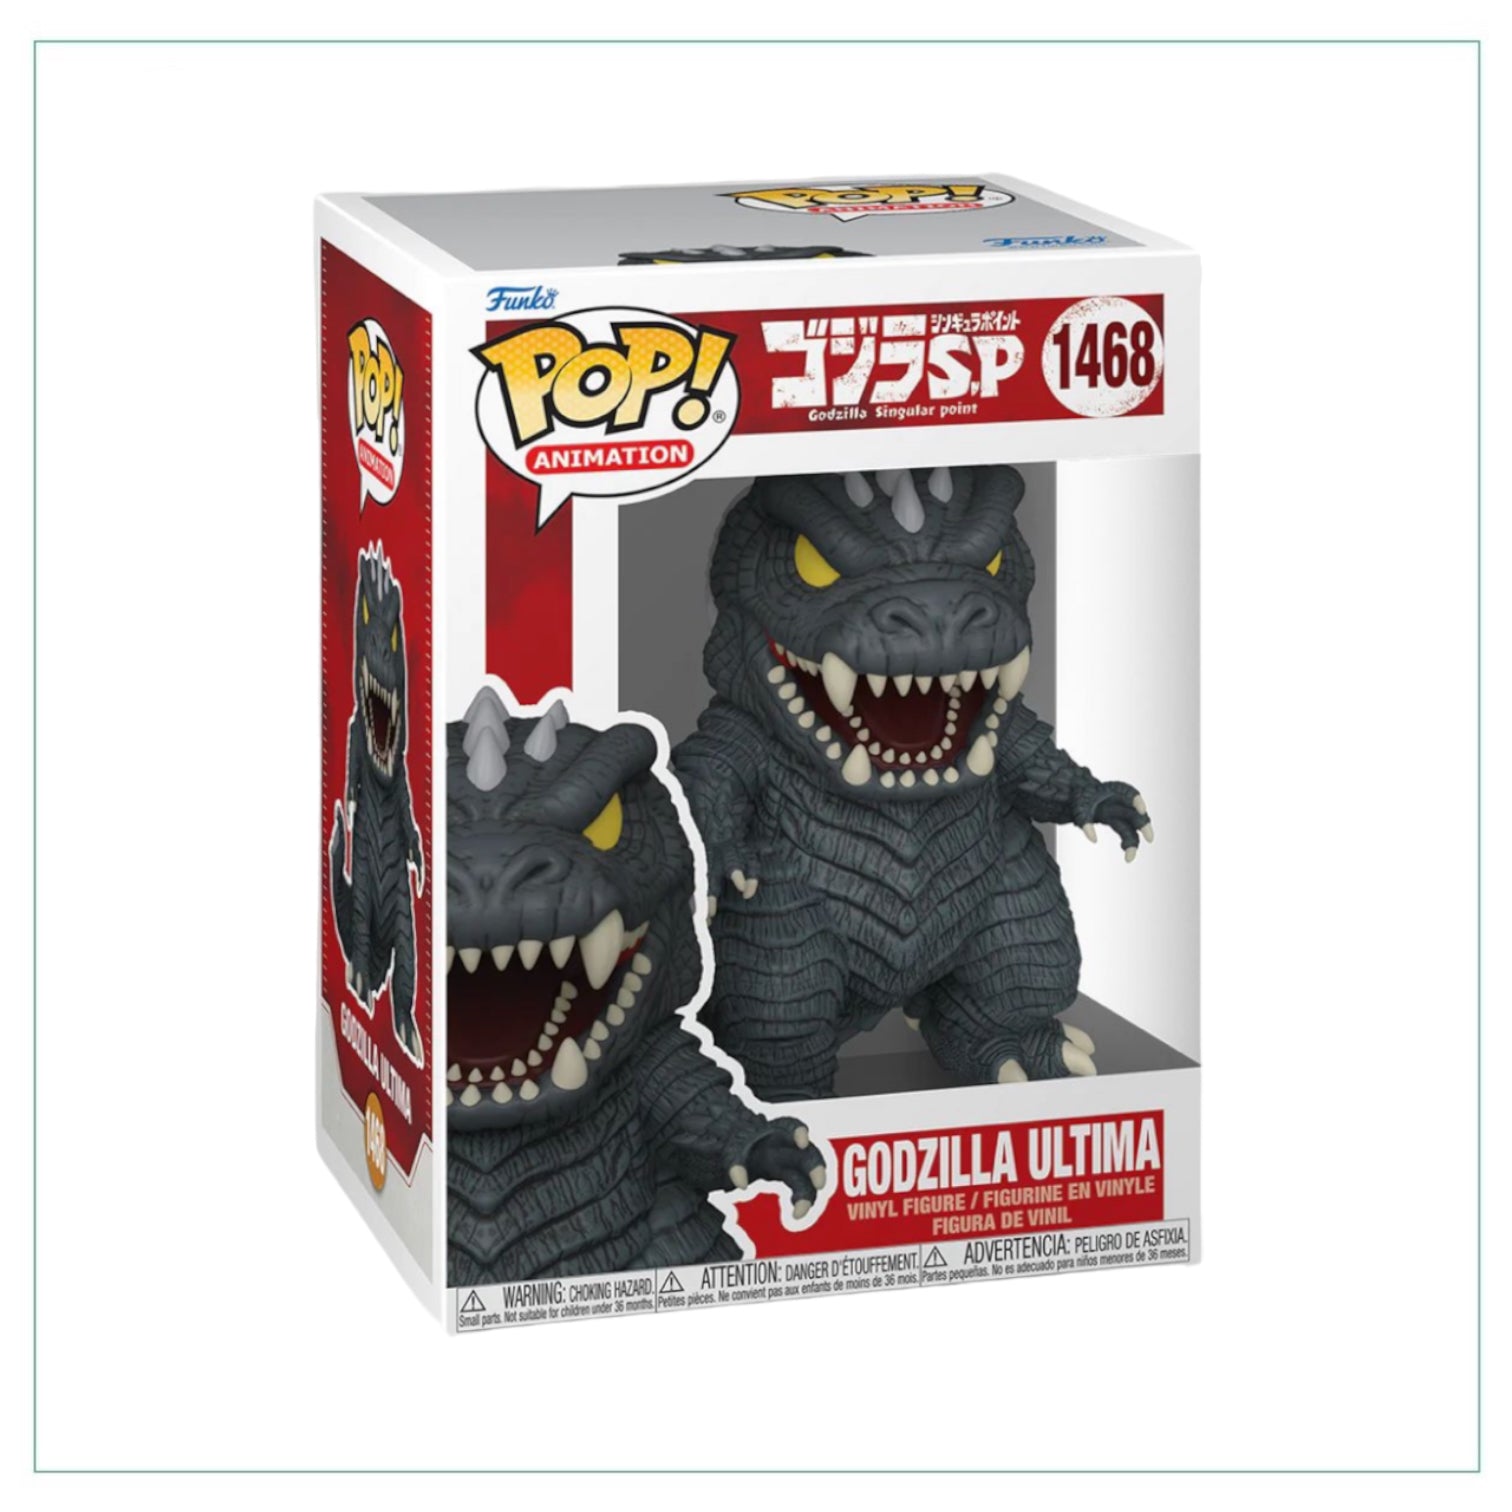 Godzilla Ultima #1468 Funko Pop! - Godzilla Singular Point